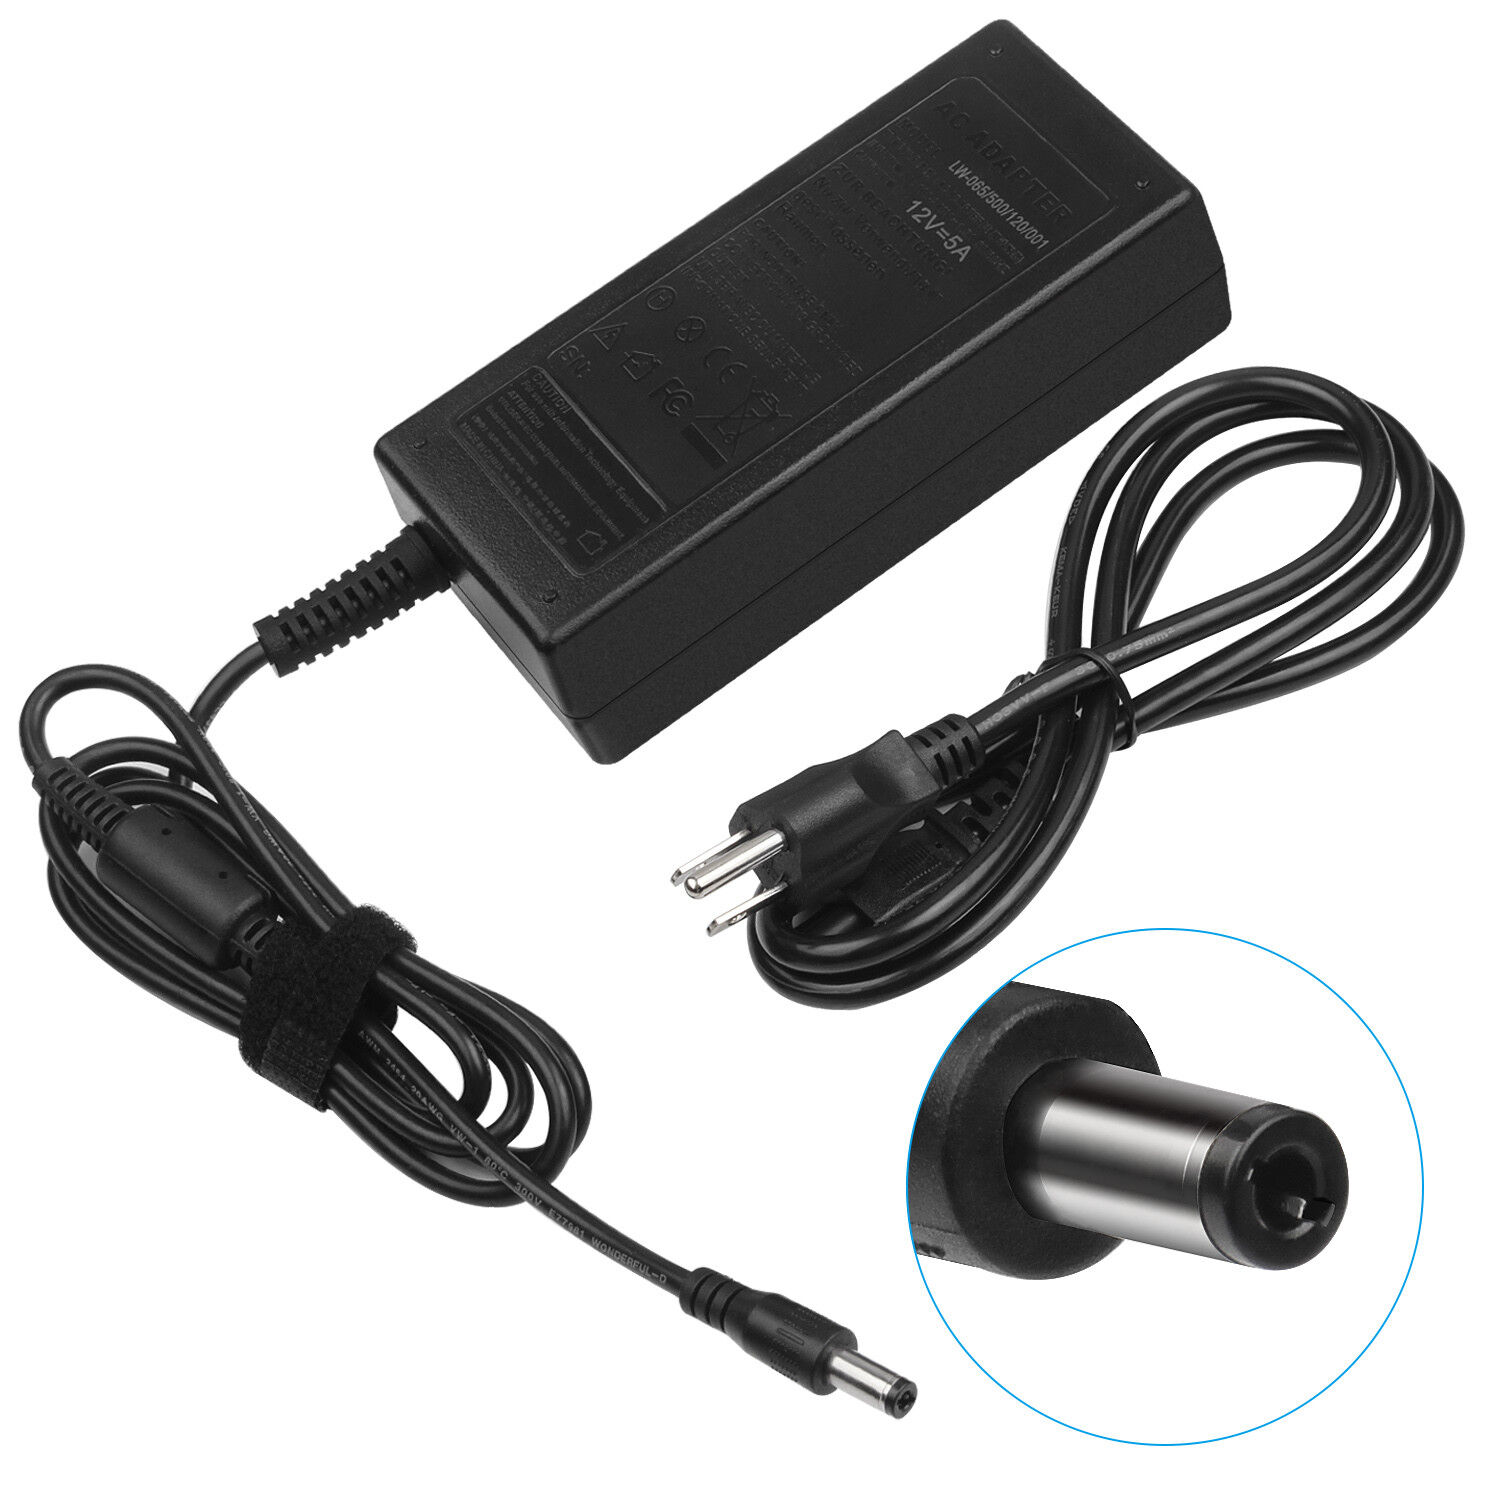 AC DC Adapter For Sirius Xm SXABB1 SXABB2 Satellite Radio Portable Speaker Dock